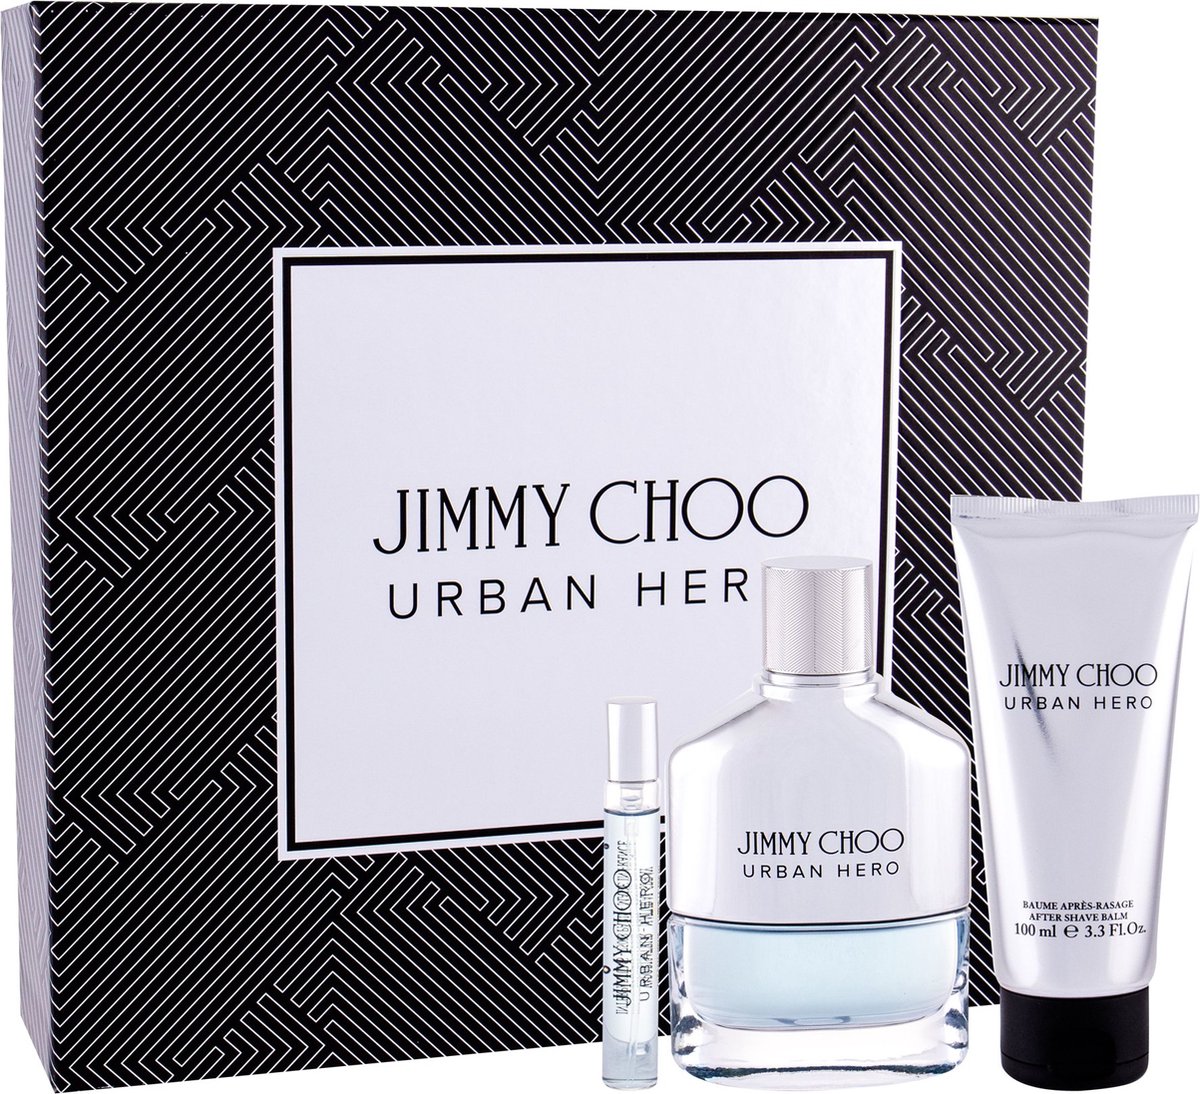 Jimmy Choo - Urban Hero Gift Set EDP 100 ml, miniaturka EDP 7,5 ml a After Shave Balsam ( balzám po holení ) 100 ml